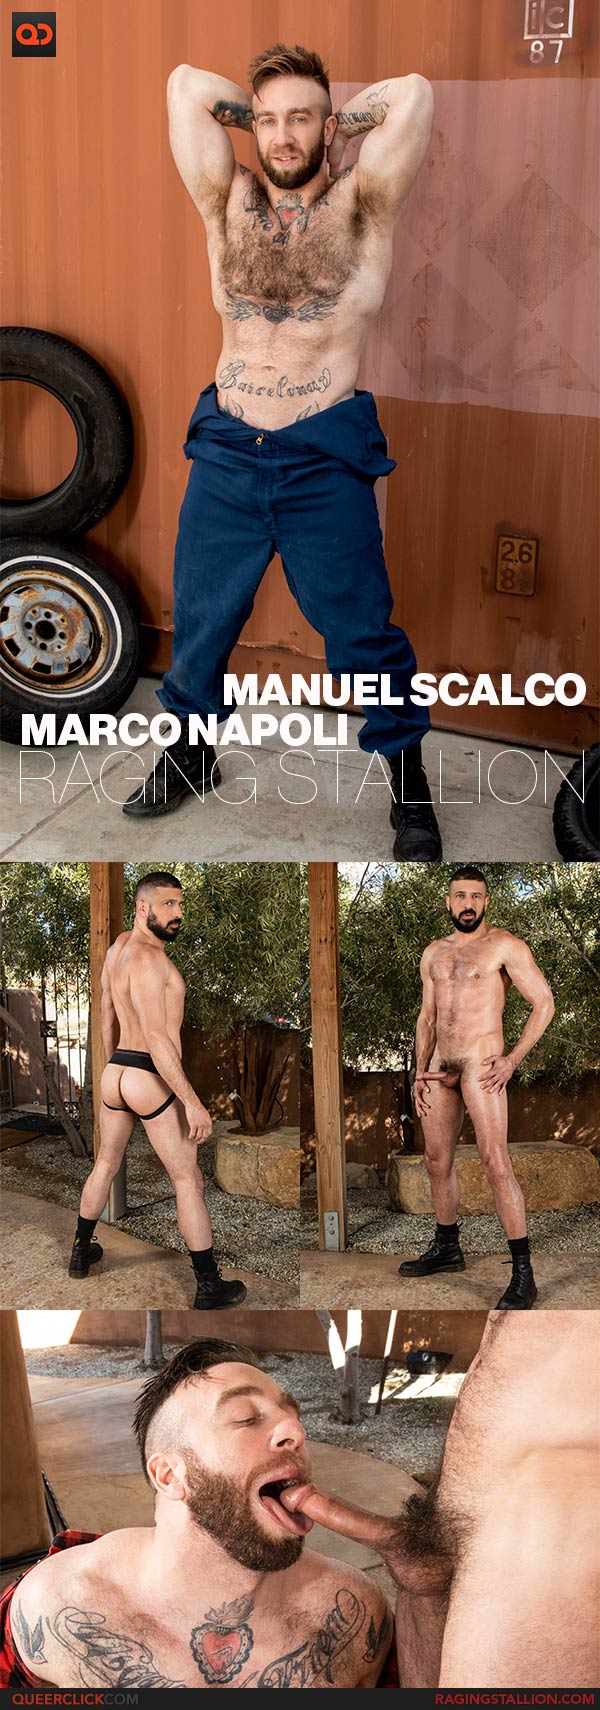 Raging Stallion:  Marco Napoli and Manuel Scalco